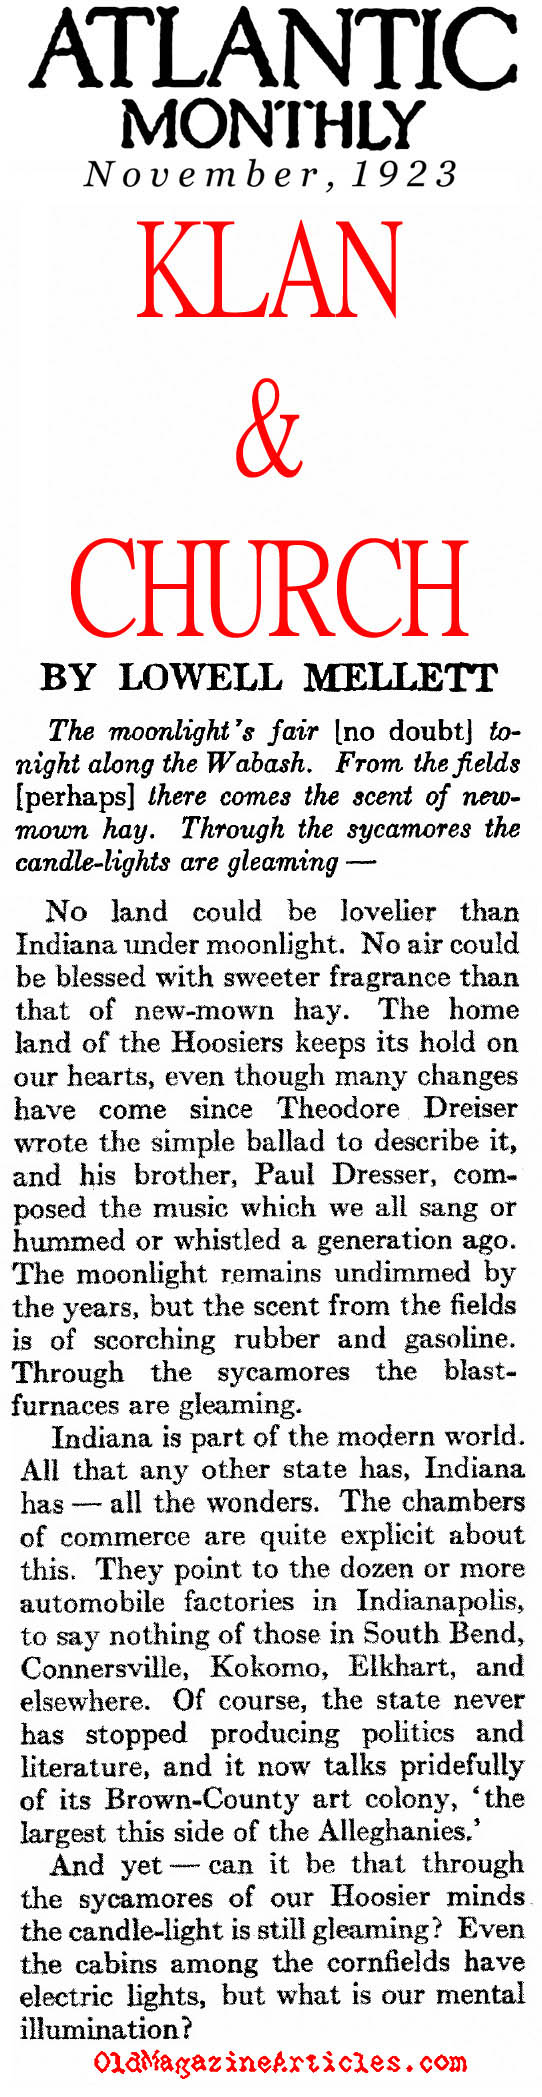 The KKK Popularity in Indiana (Atlantic Monthly, 1923)